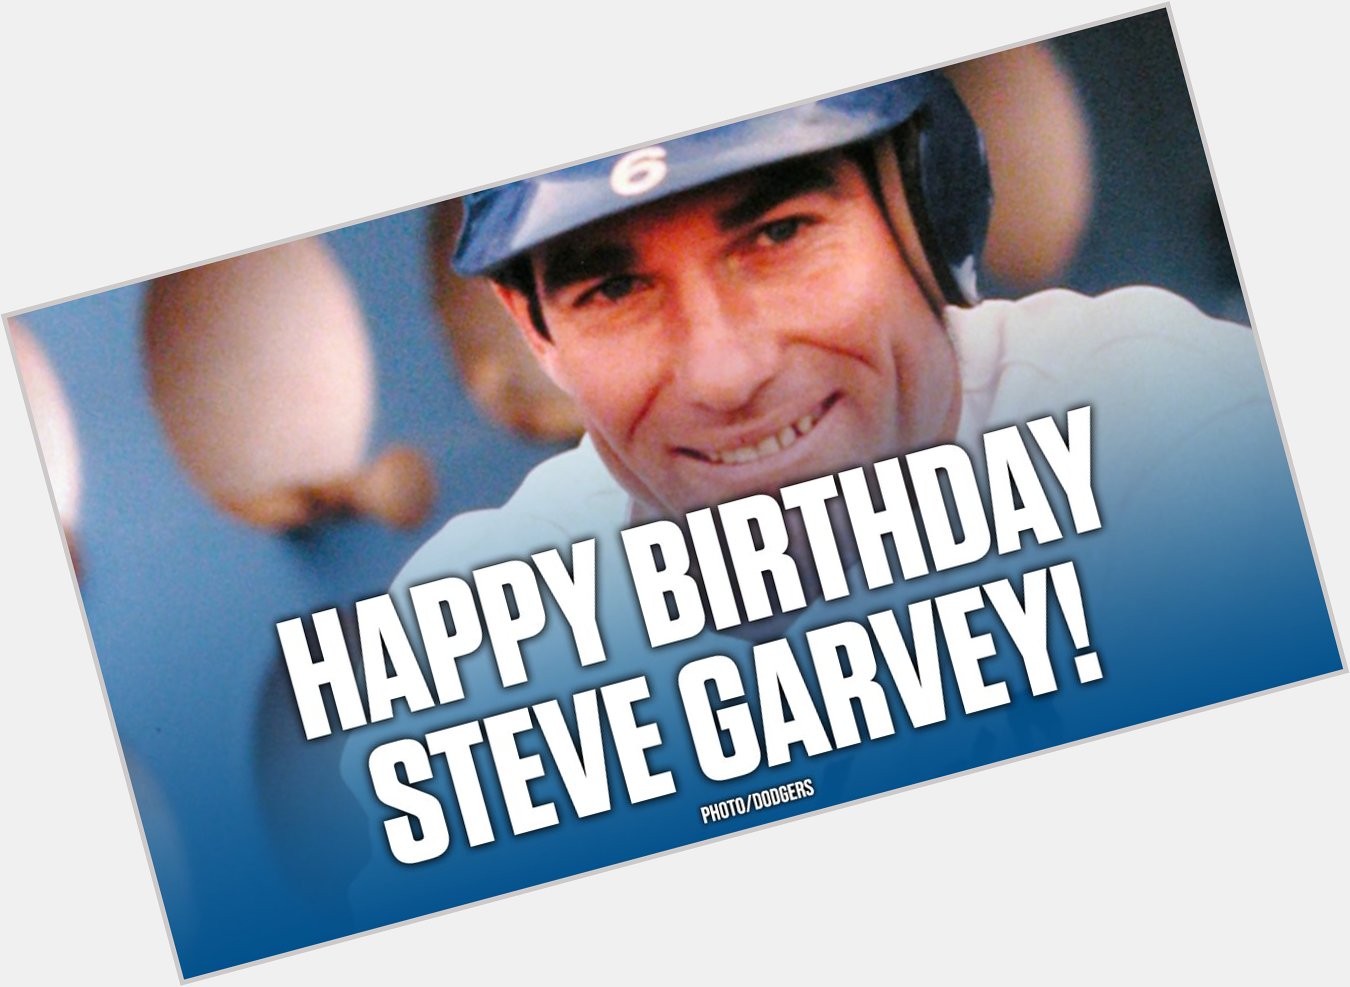  Fans, let\s wish legend Steve Garvey a Happy Birthday! 